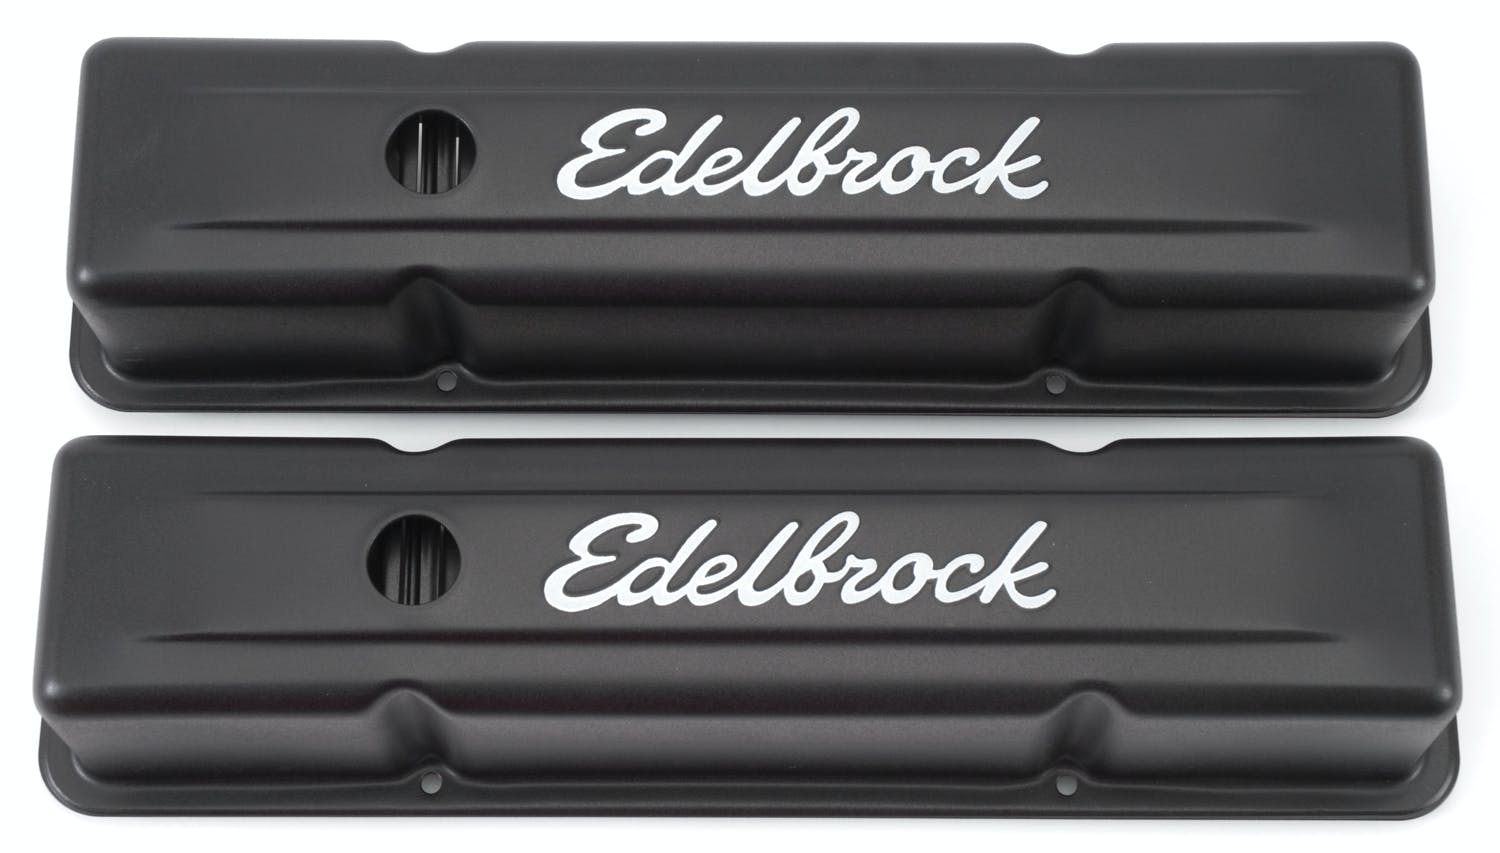 Edelbrock 4643 Signature Series Valve Covers for Chevrolet 262-400 59-86